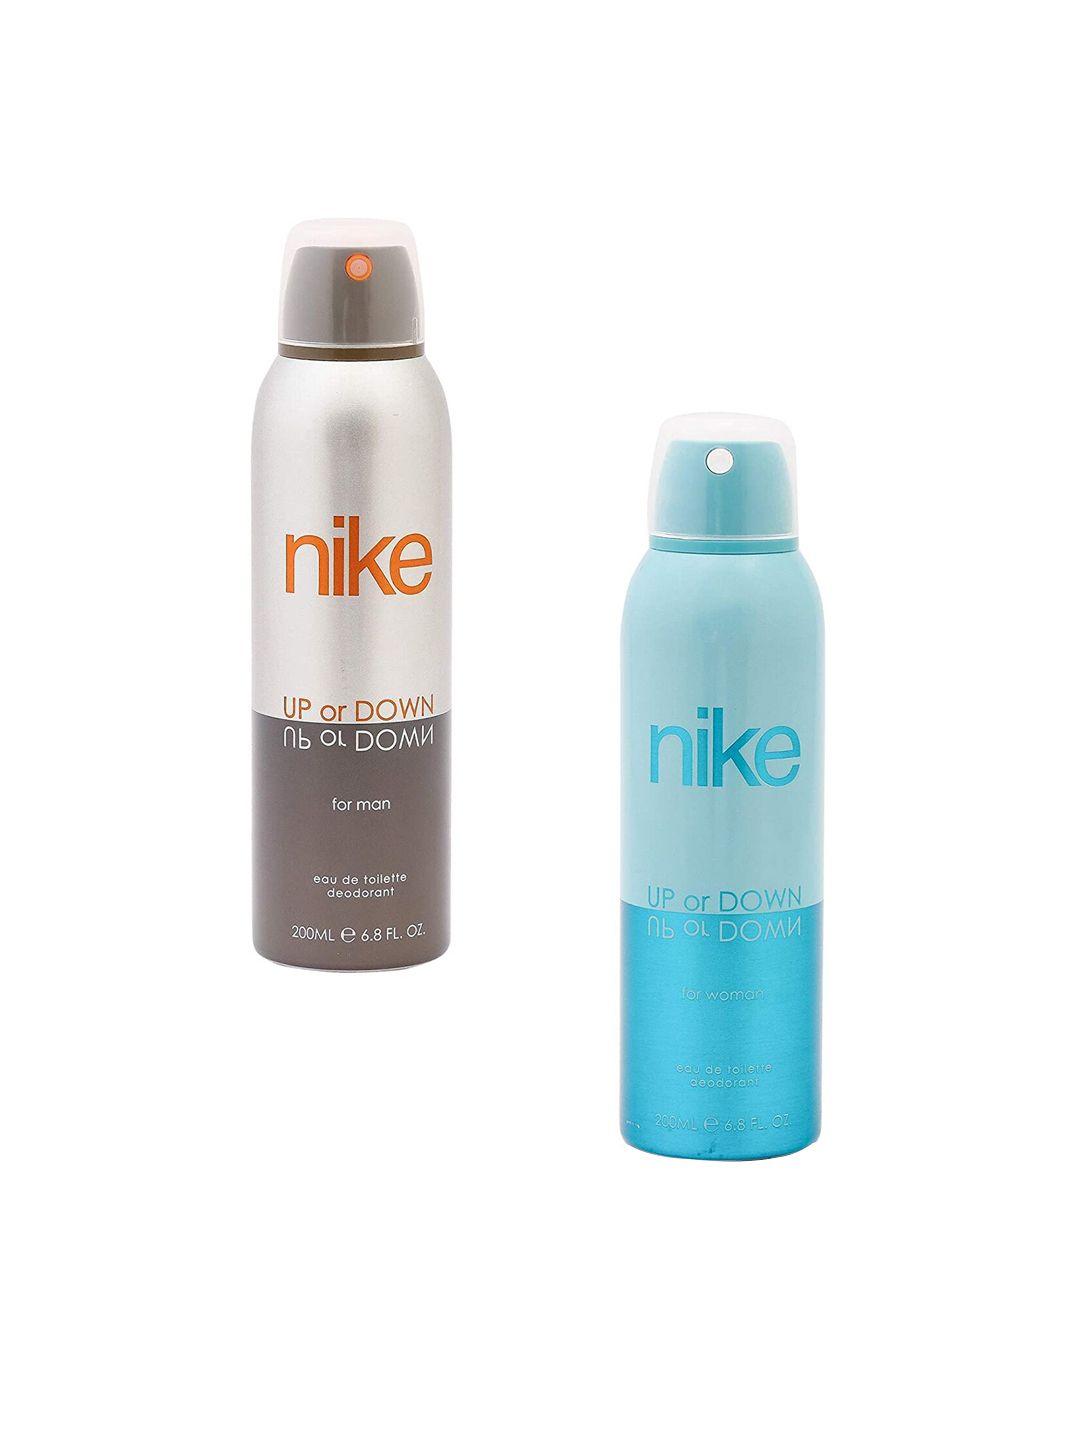 nike set of 2 long-lasting up or down deodorant - 200ml each